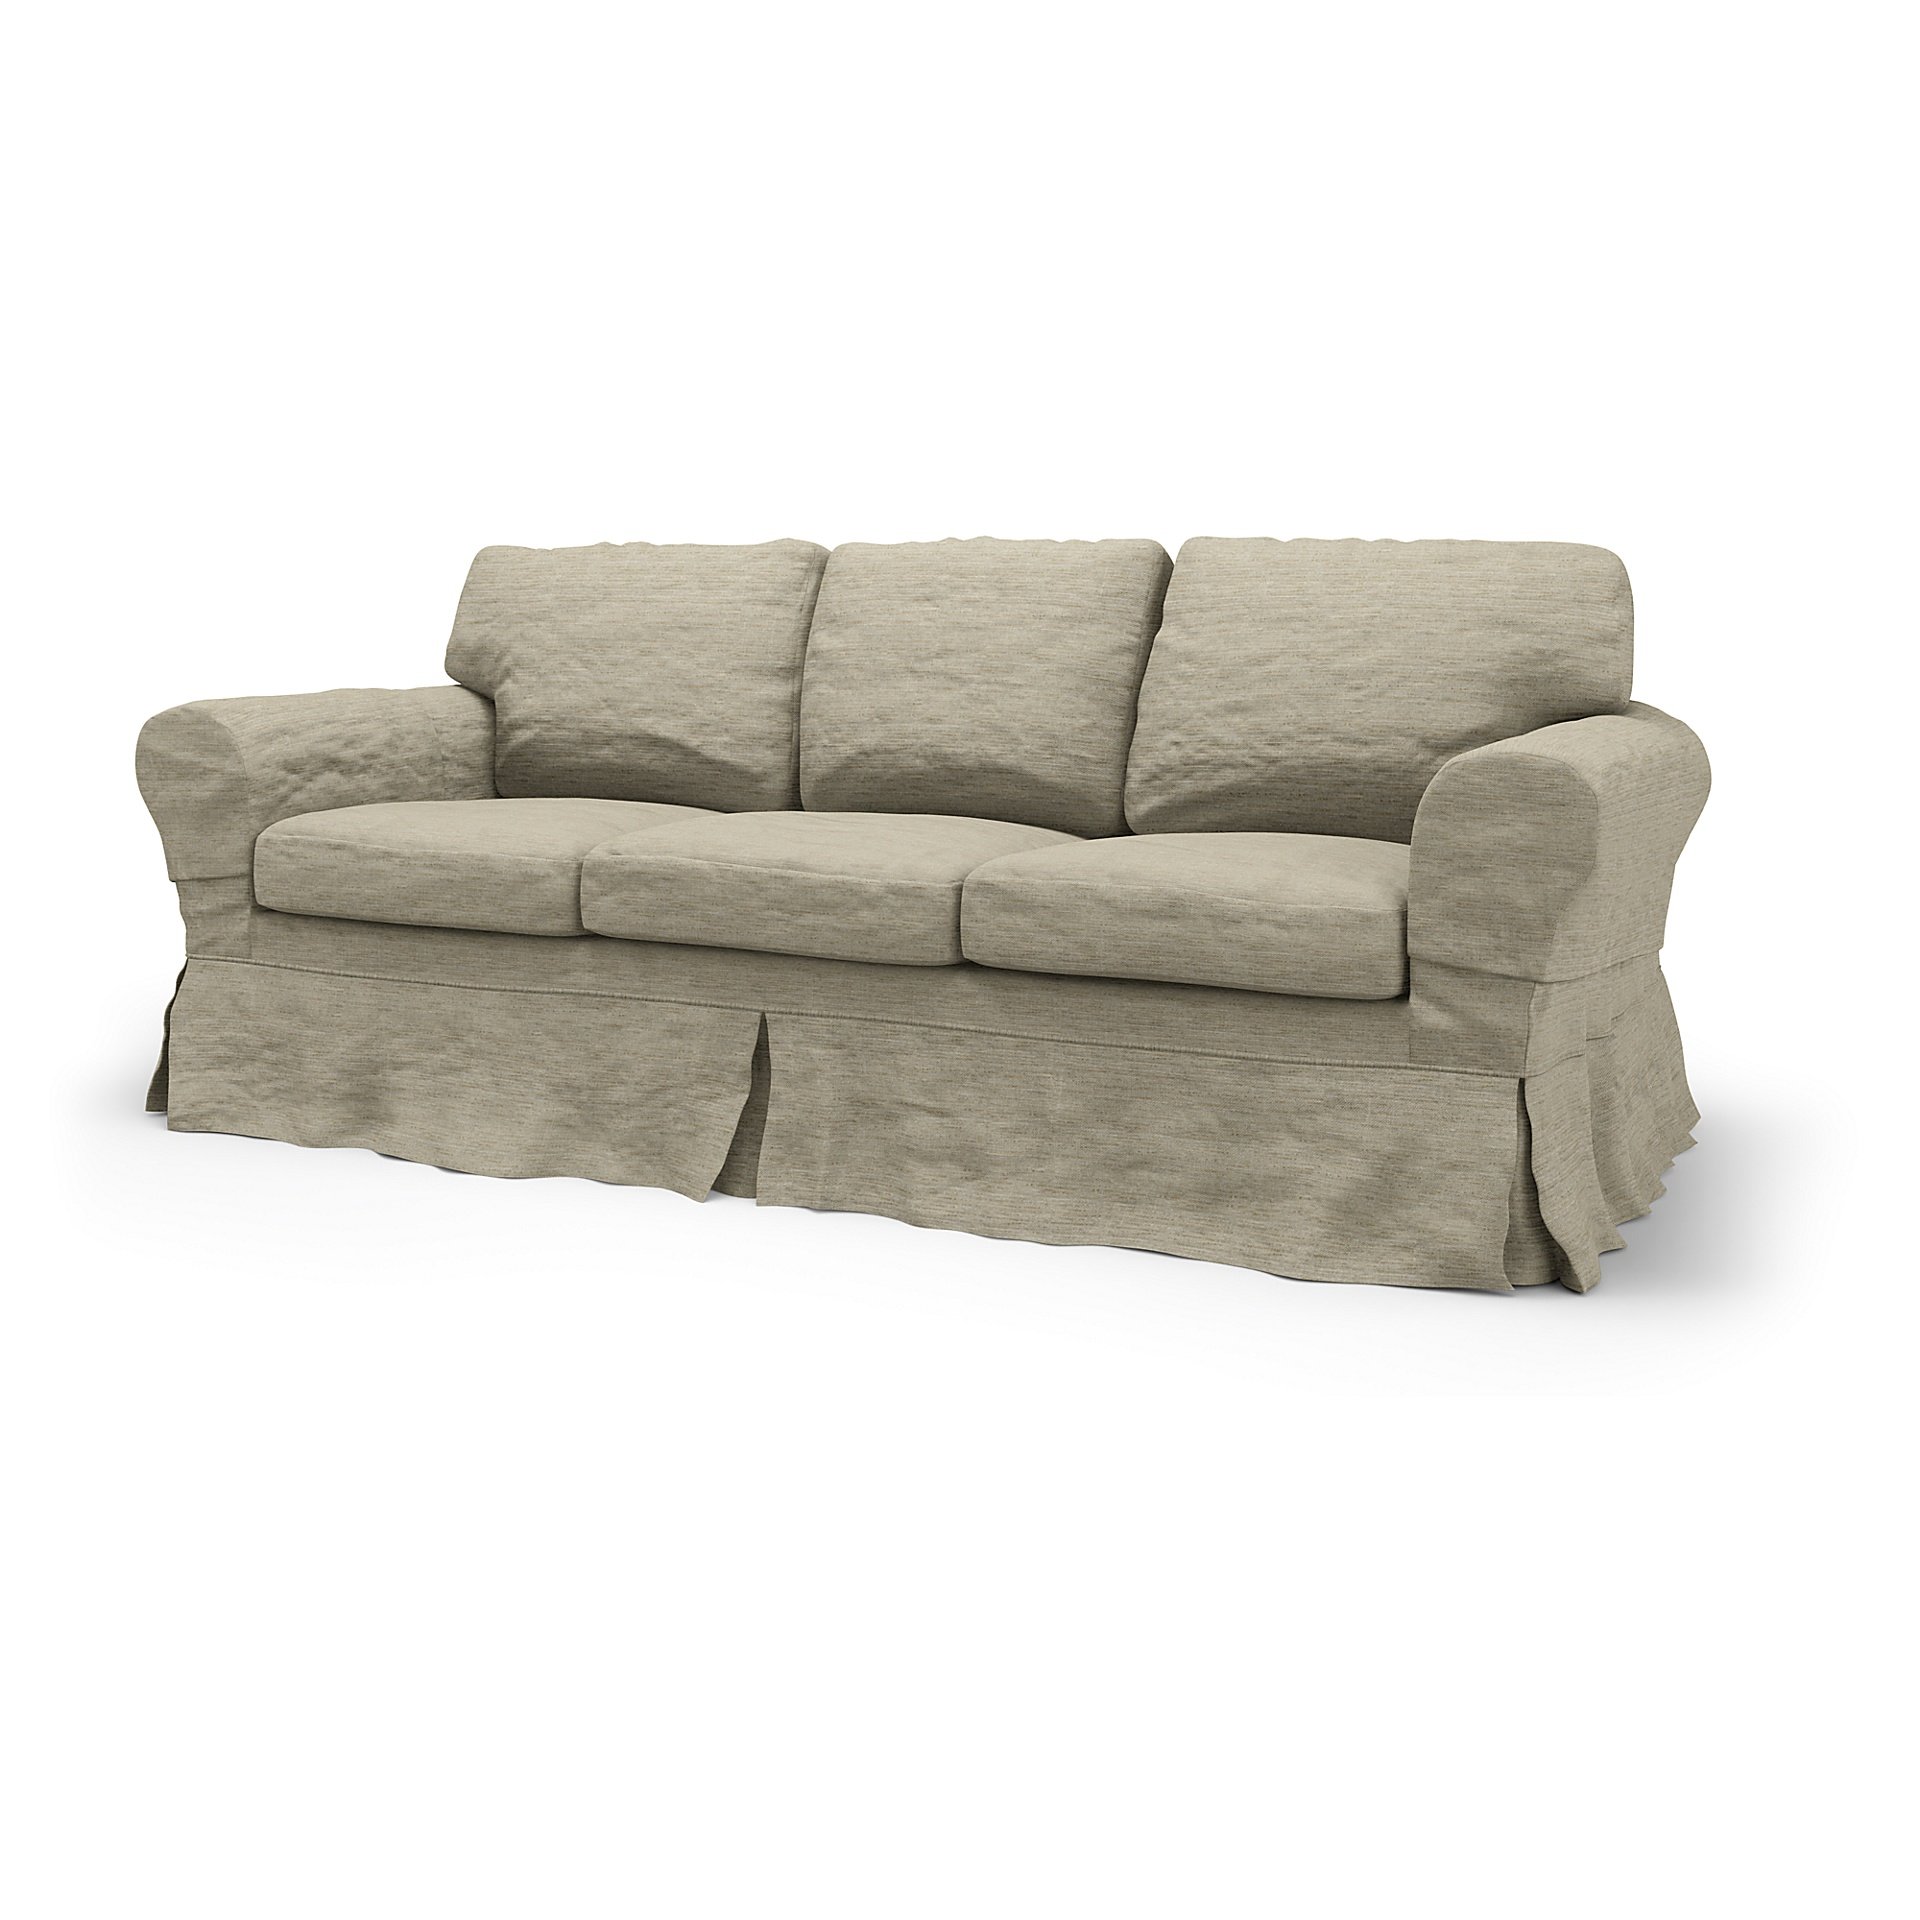 IKEA - Ektorp 3 Seater Sofa Bed Cover, Light Sand, Boucle & Texture - Bemz